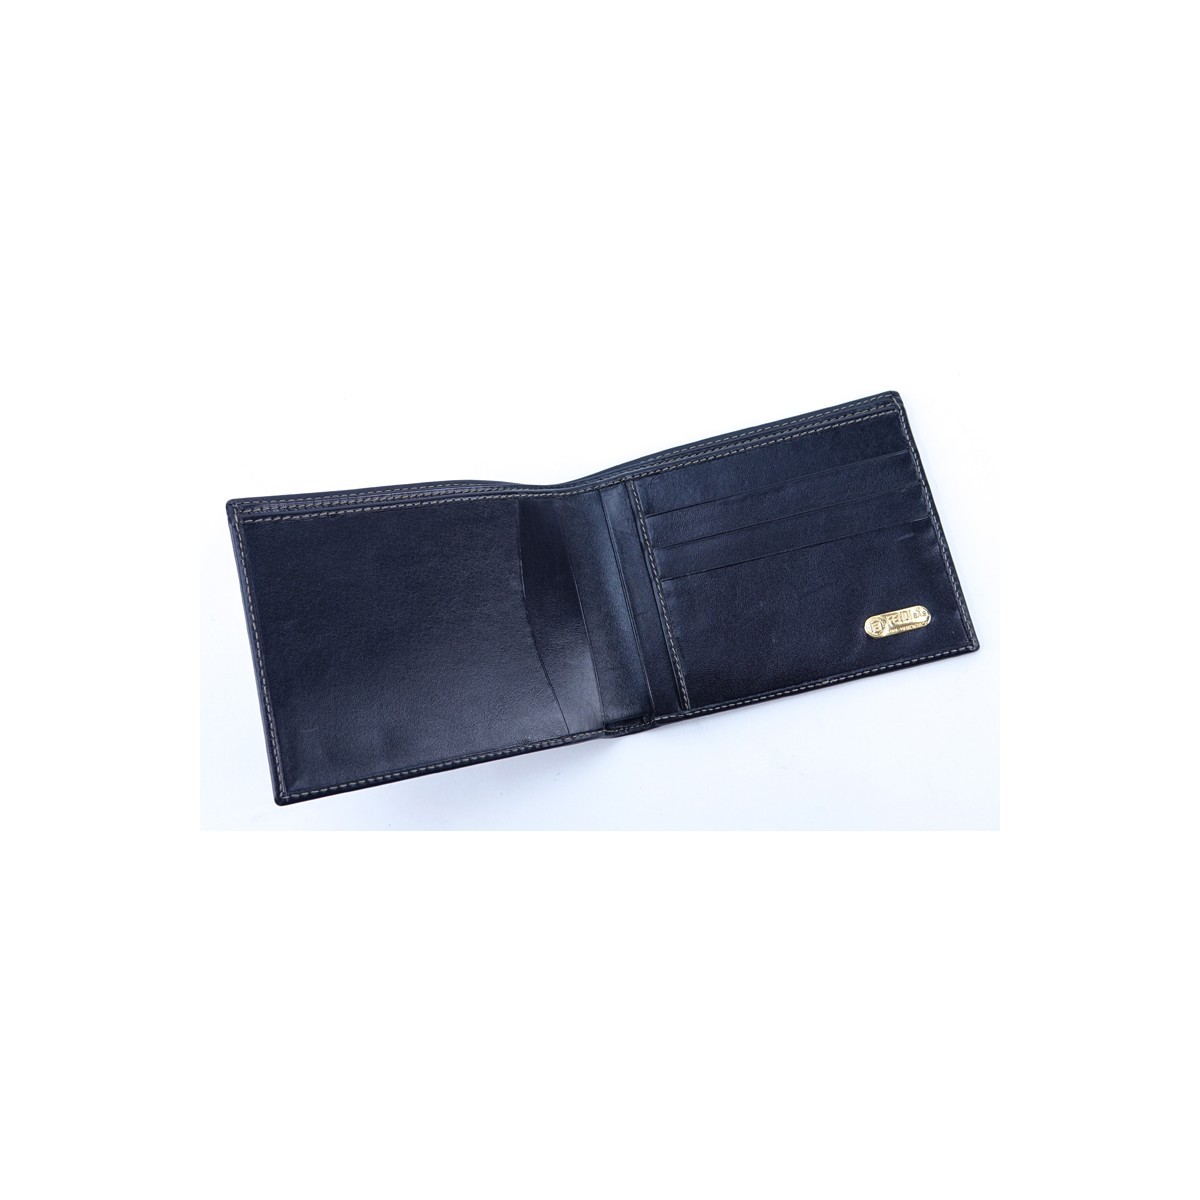 Fendi Black/Beige Striped Coated Canvas Bifold 3 Slot Wallet. Gold tone hardware.